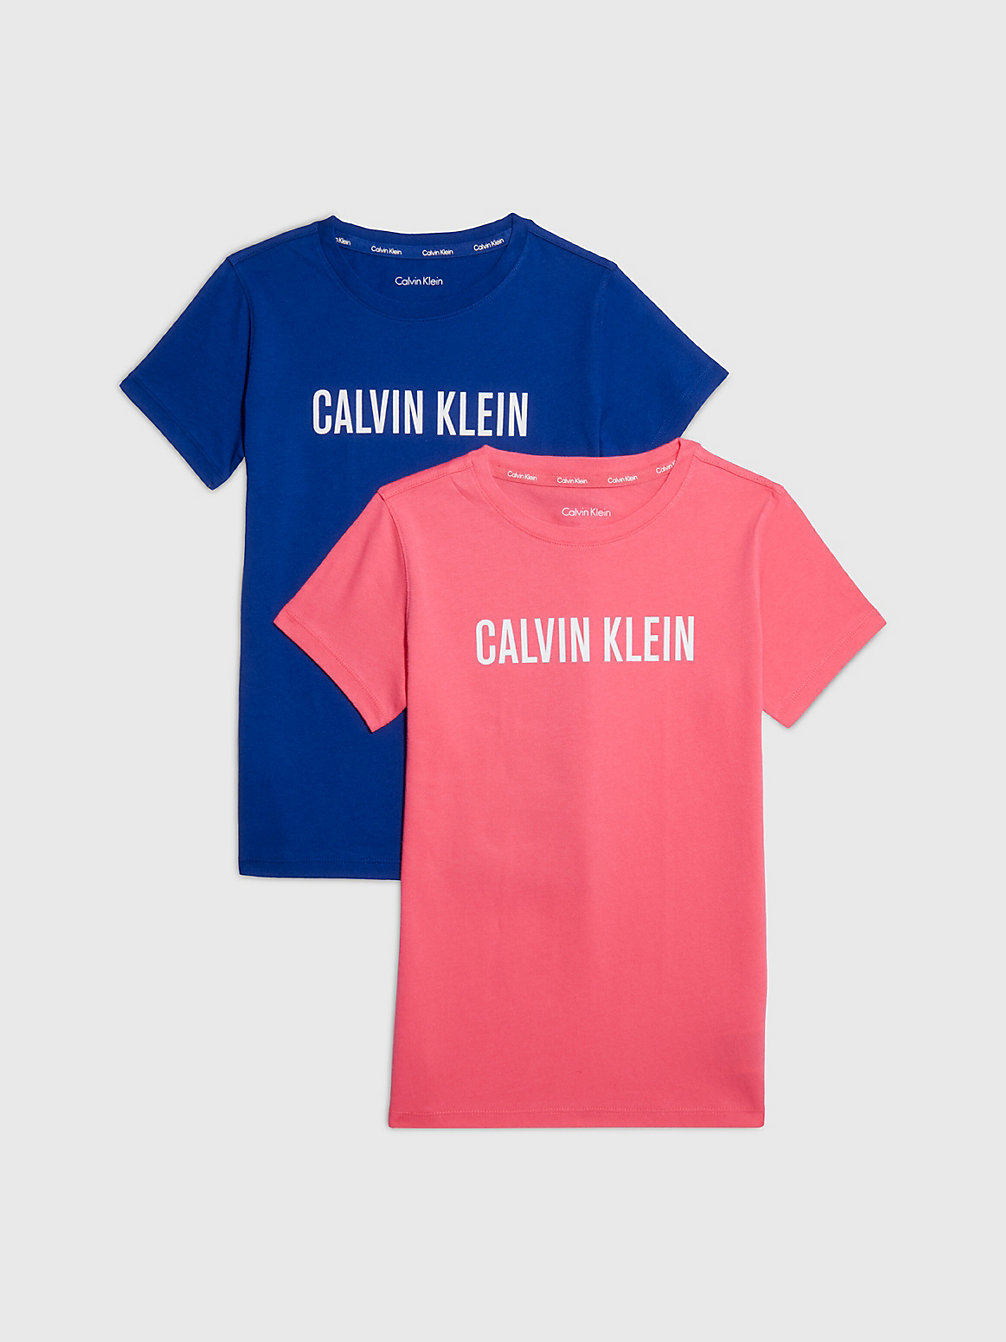 PINKFLASH/BOLDBLUE 2er-Pack T-Shirts - Intense Power undefined Maedchen Calvin Klein